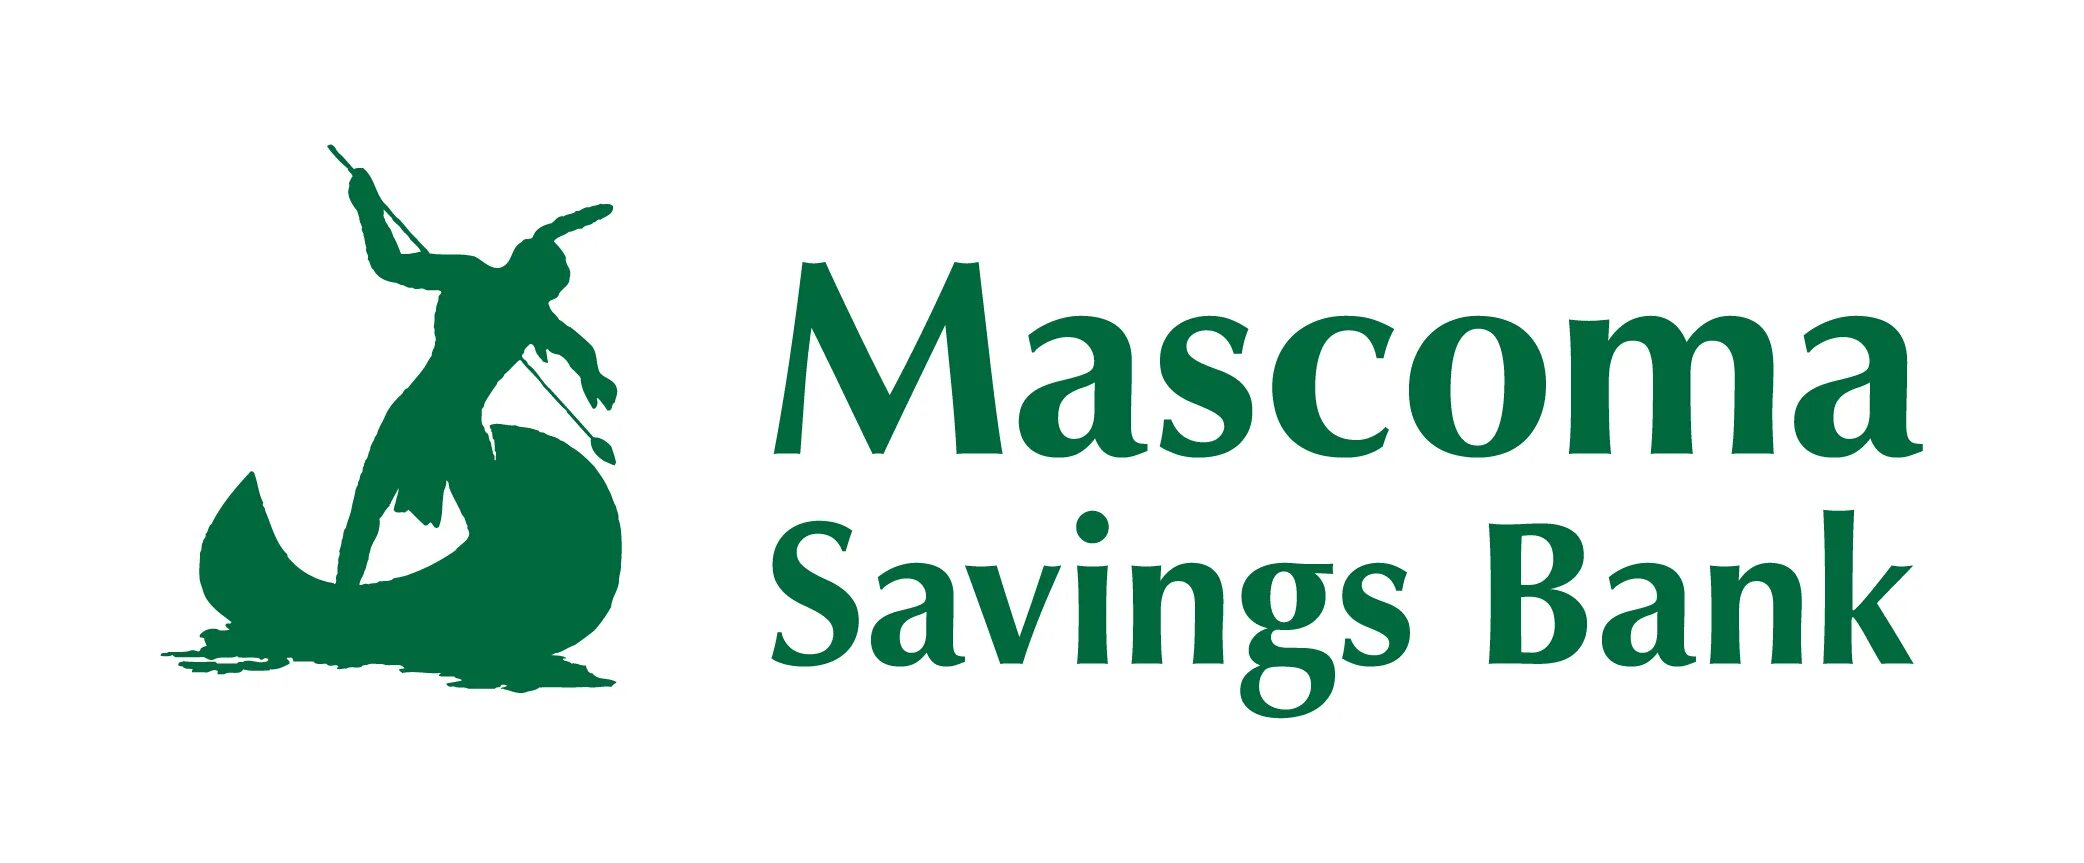 Банк сохраняй. Savings Bank. Айыл банк лого. Mascoma. Логотип банков США похожий на дерево.